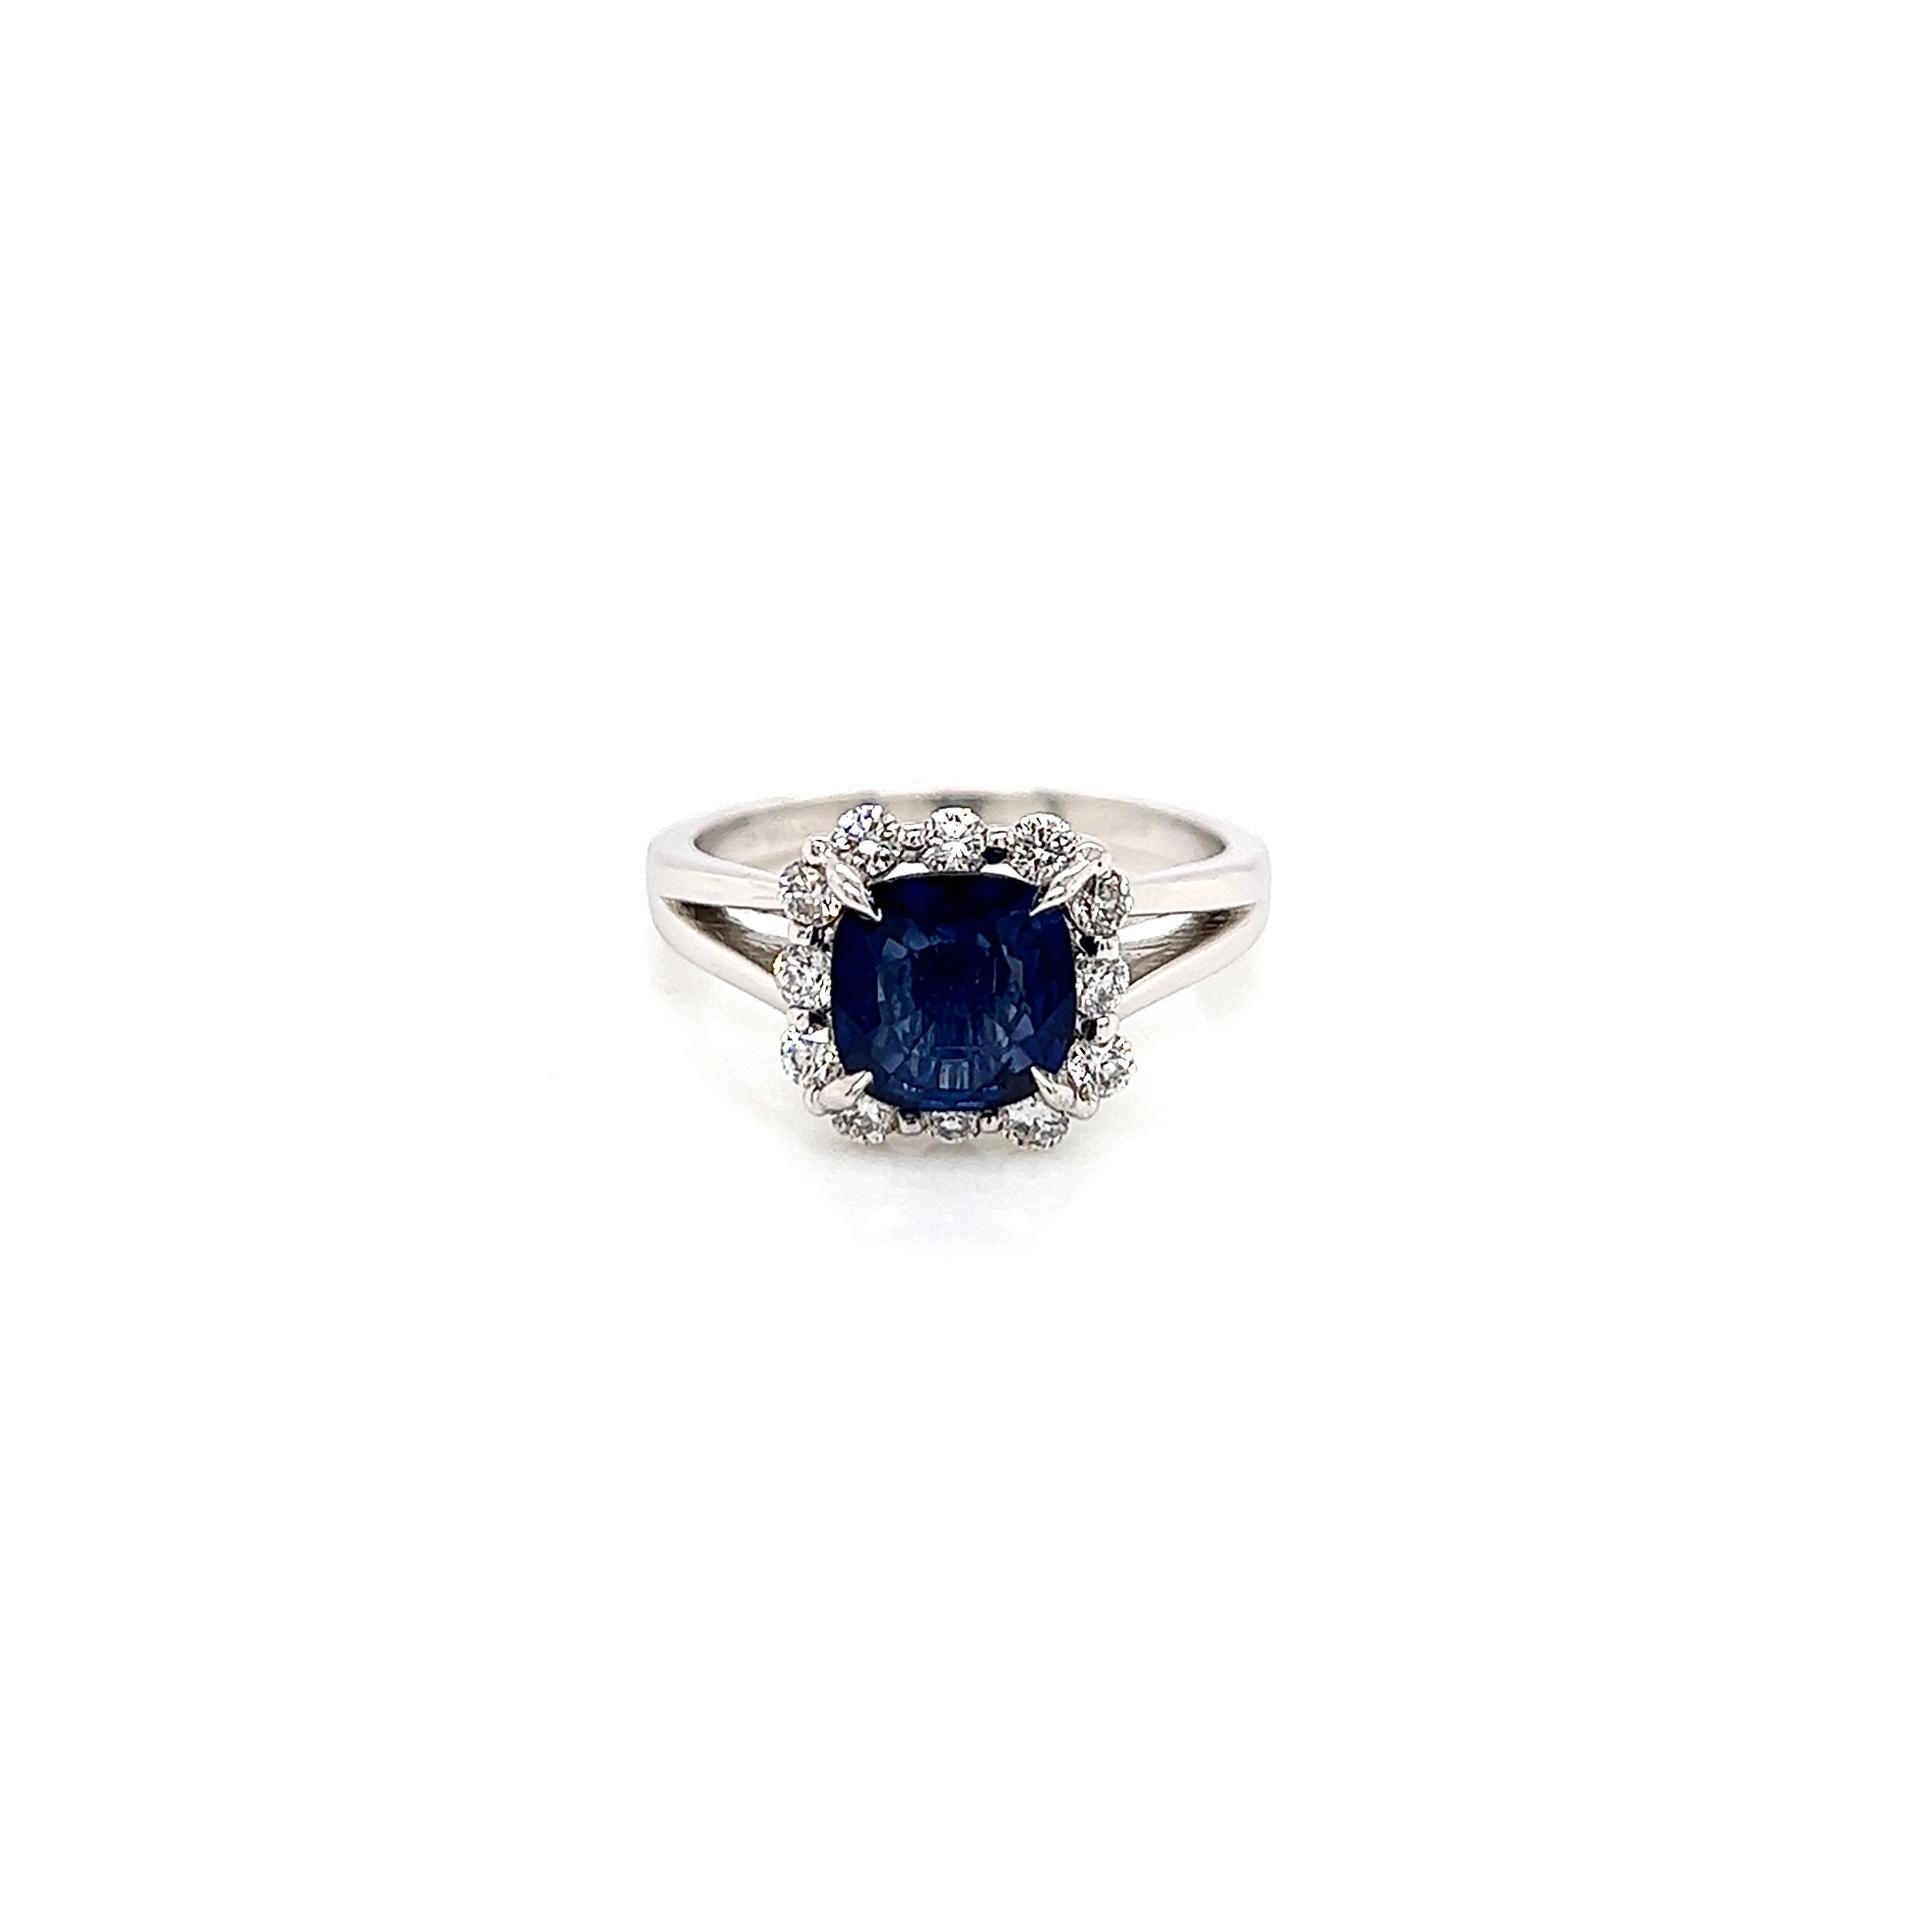 2.02 Total Carat Sapphire Diamond Engagement Ring

-Metal Type: 18K White Gold
-1.55 Carat Cushion Cut Blue Sapphire
-0.47 Carat Round Side Diamonds 
-Size 6.75

Made in New York City.